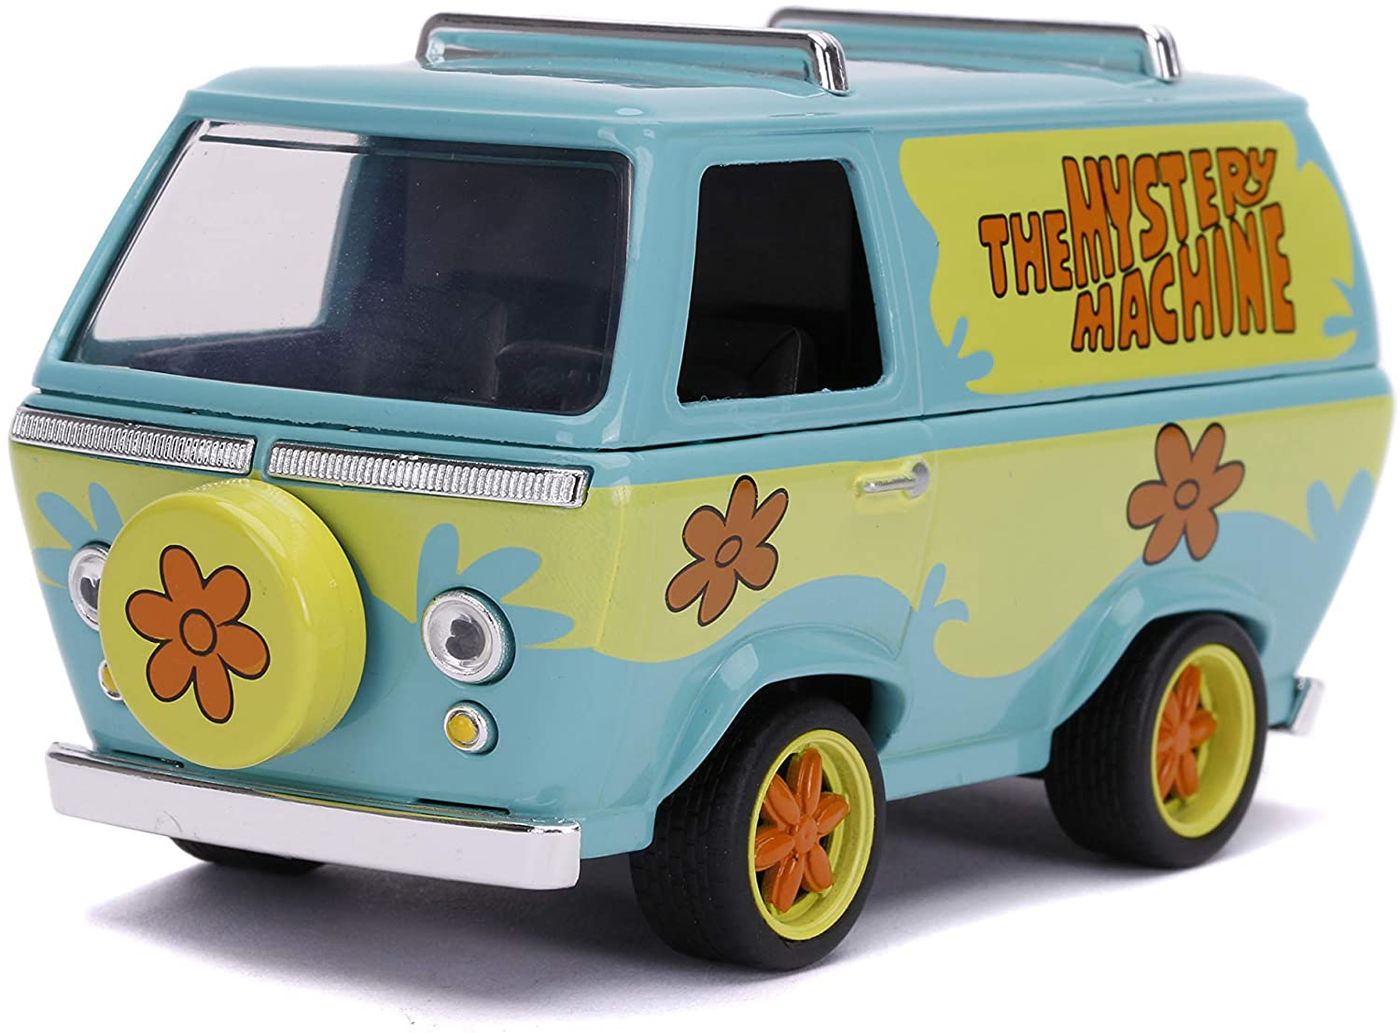 SCOOBY DOO : MYSTERY MACHINE 1/32 Diecast Model Jada Toys – Fun Box Monster  Emporium